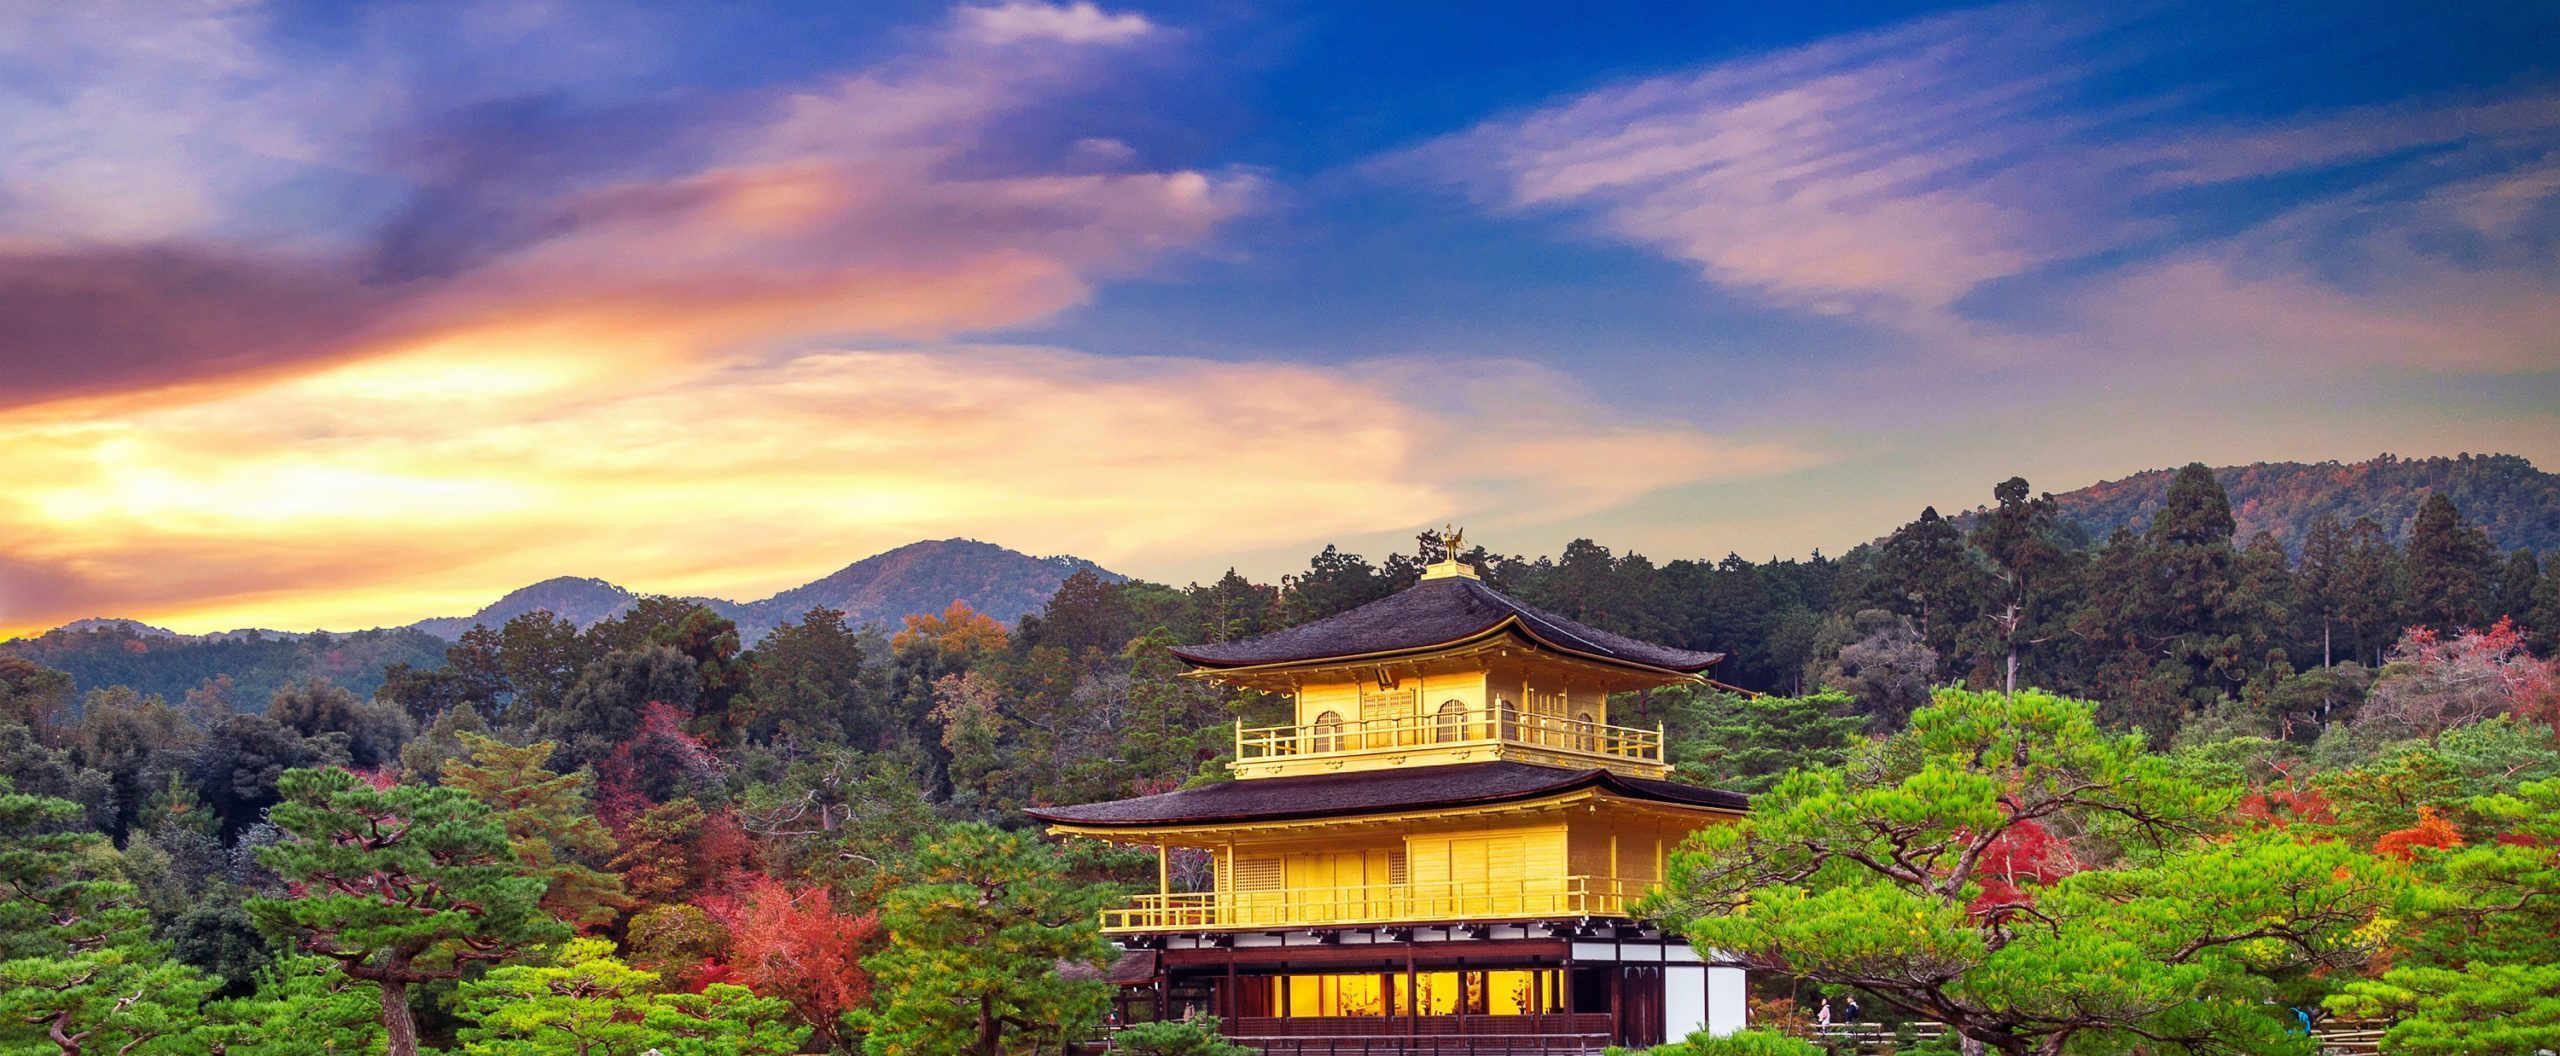 The Golden Pavilion Kinkakuji Temple in Kyoto Japan - Endless Turns